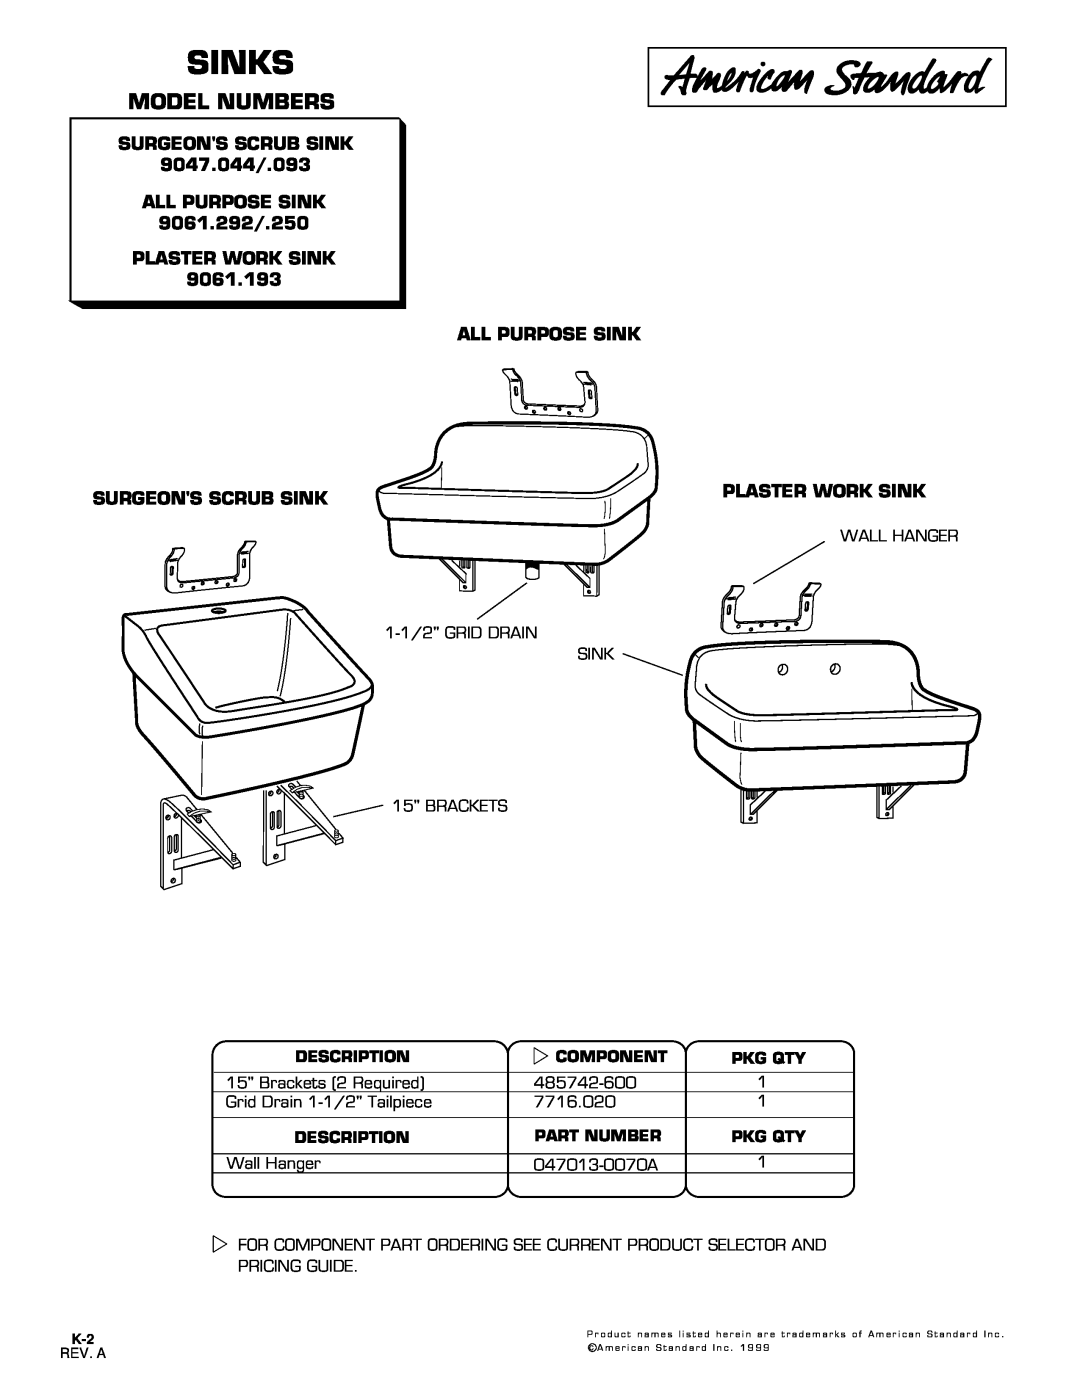 American Standard 9047.093 manual Sinks, Model Numbers, SURGEONS SCRUB SINK 9047.044/.093, Plaster Work Sink, Description 